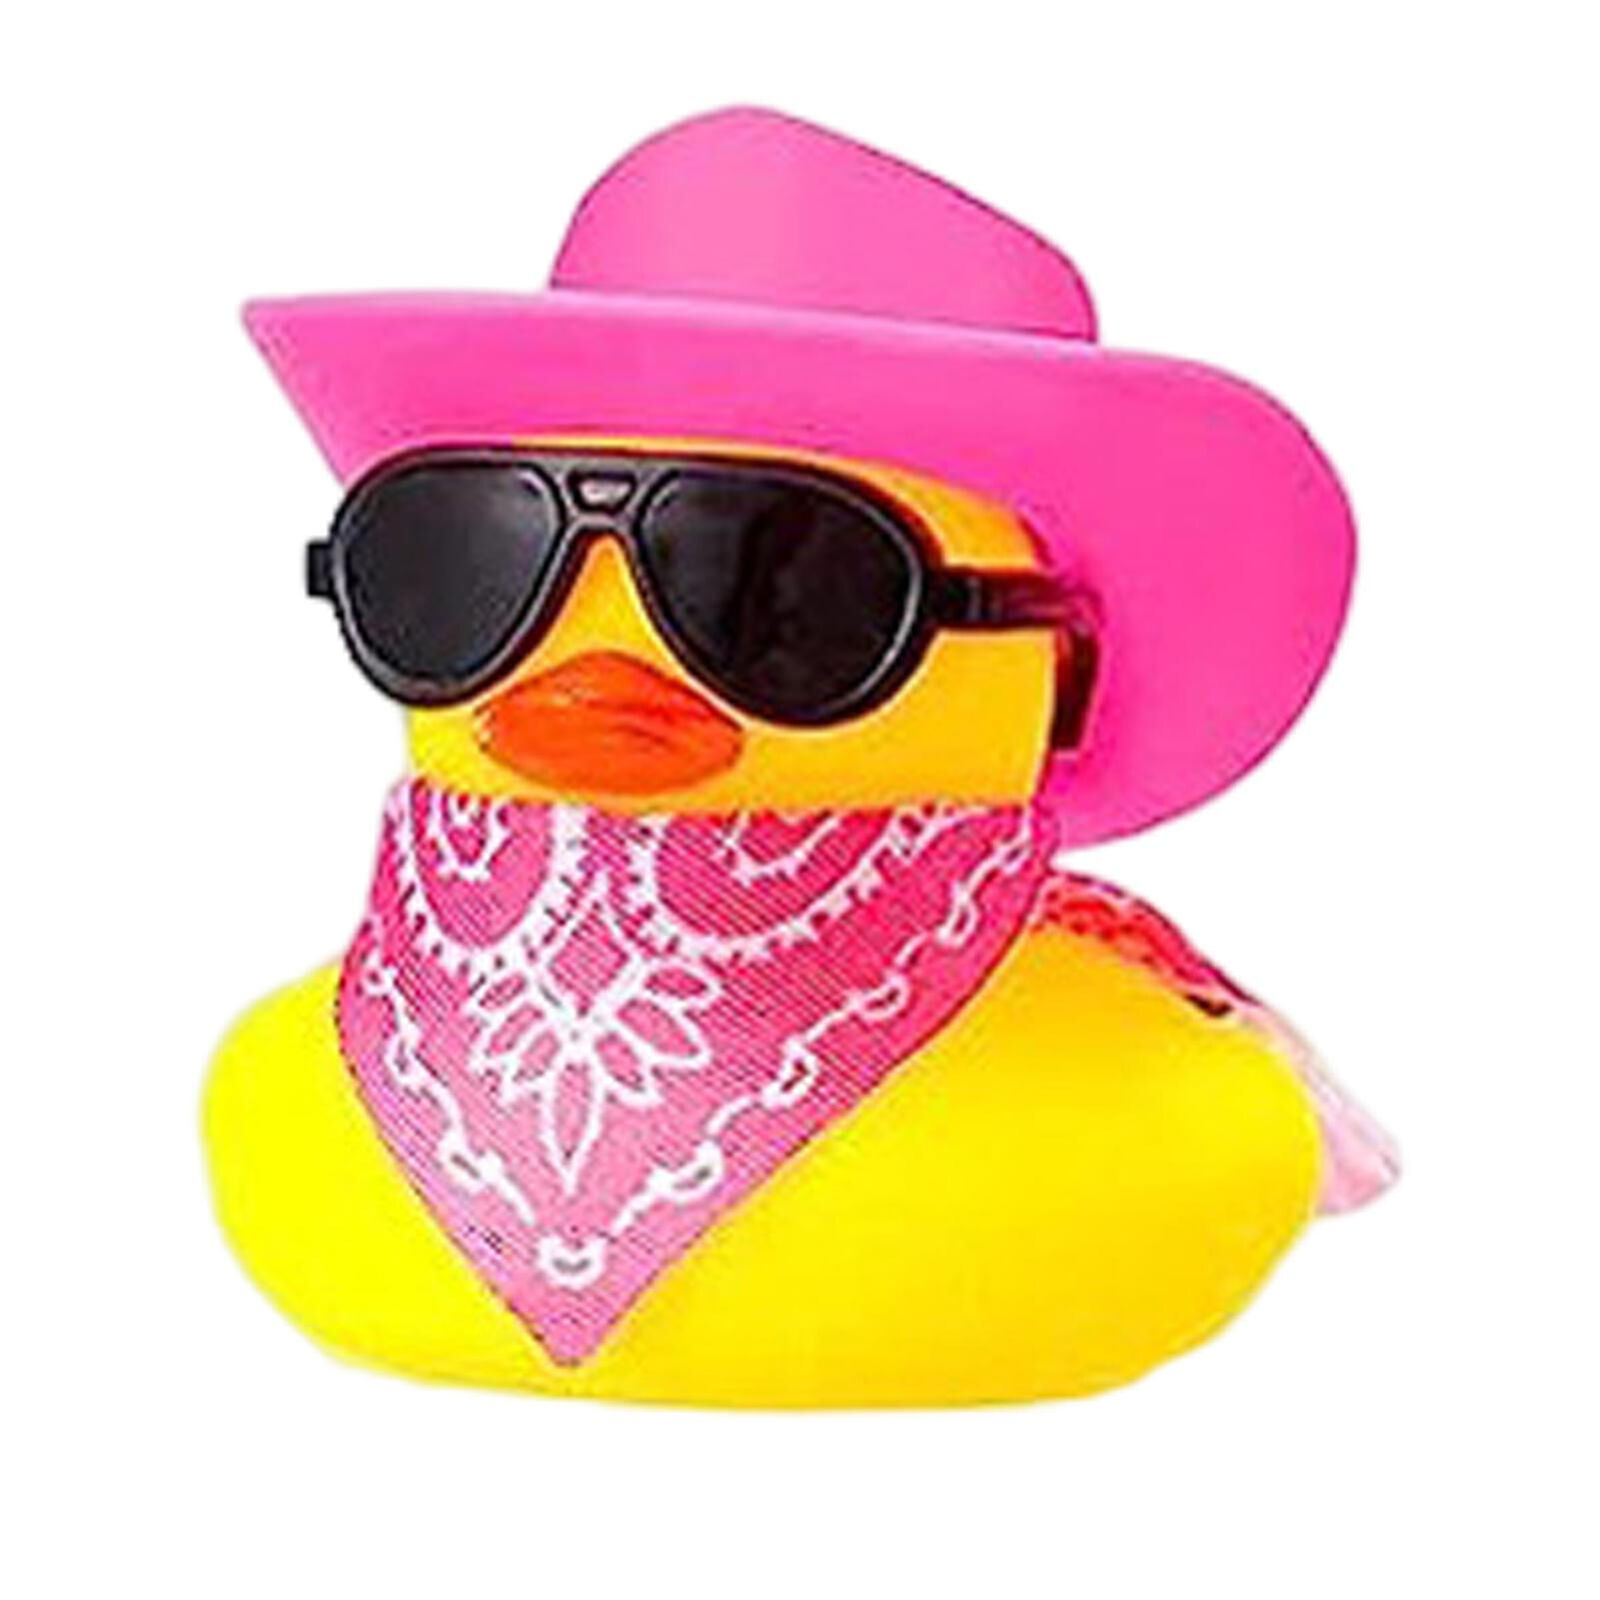 Cowboy Rubber Duck Funny Car Duck Bath Toy Floater Kids Babies Shower Accessorie